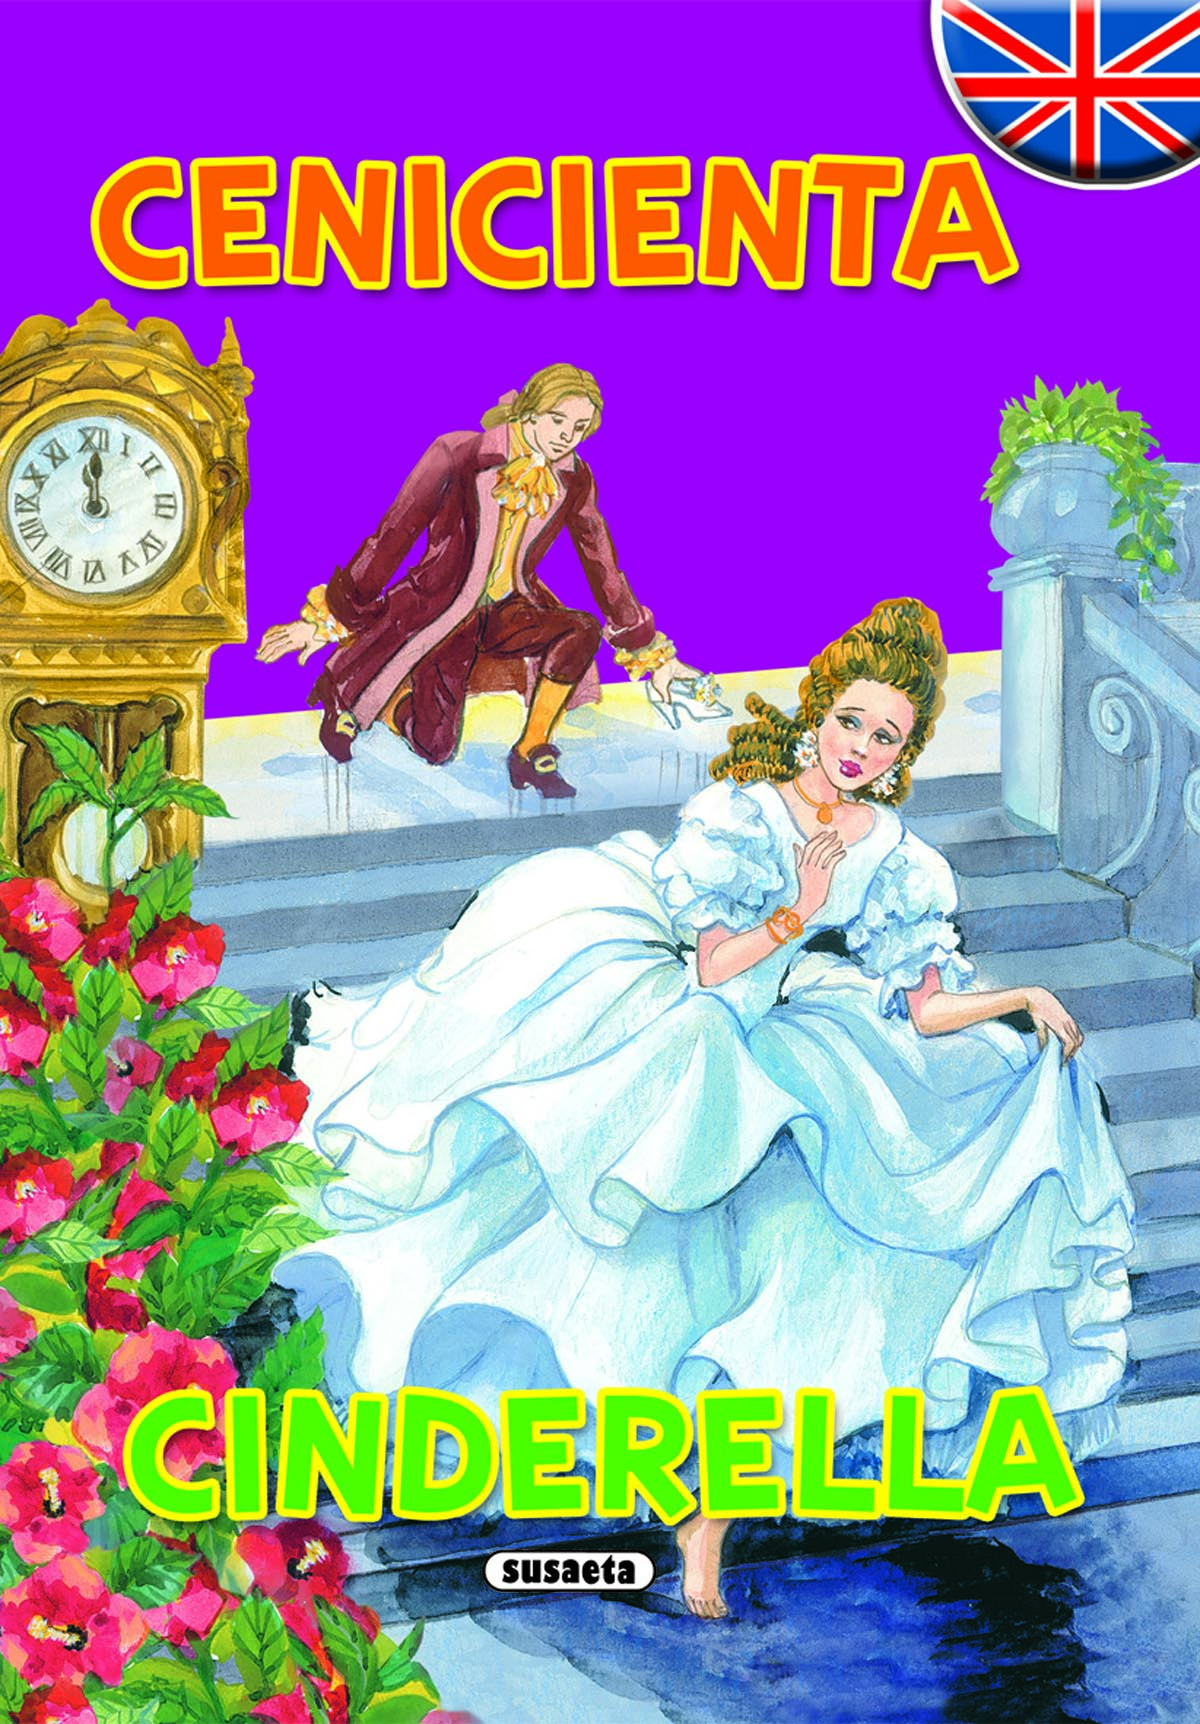 Cenicienta - Cinderella